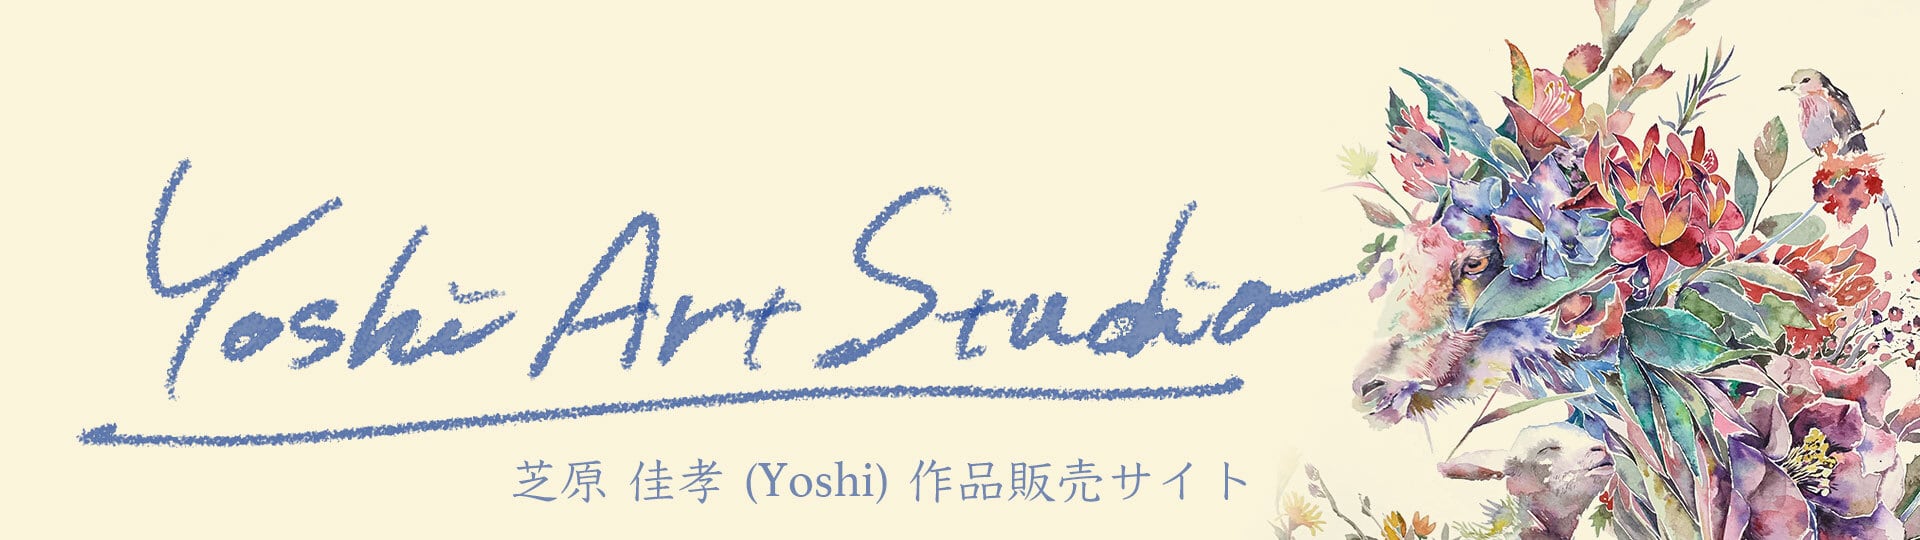 Yoshi Art Studio